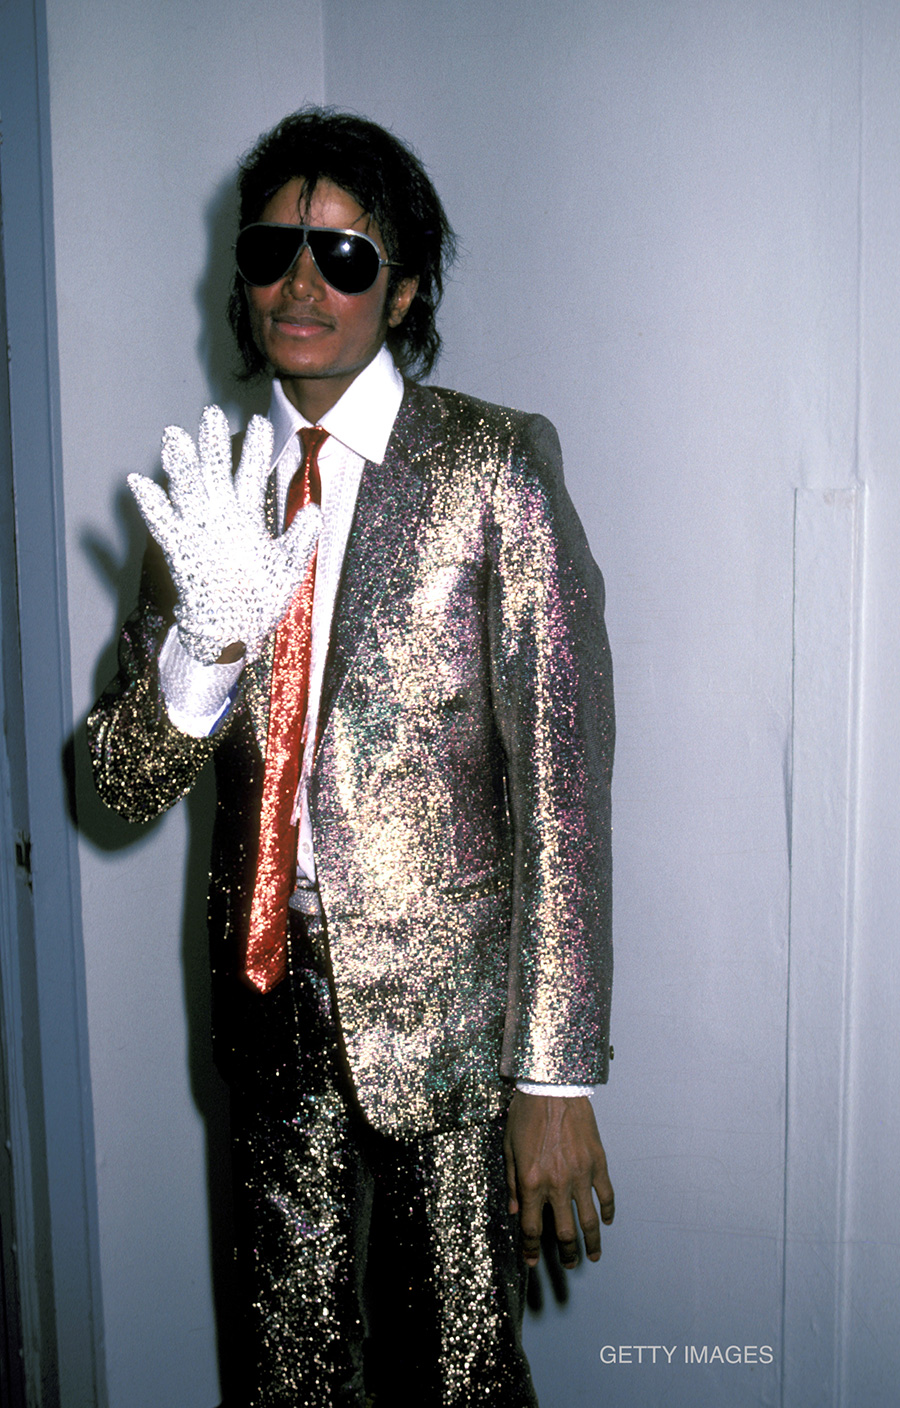 Michael Jackson At T.J. Martell Foundation Dinner In April 1984